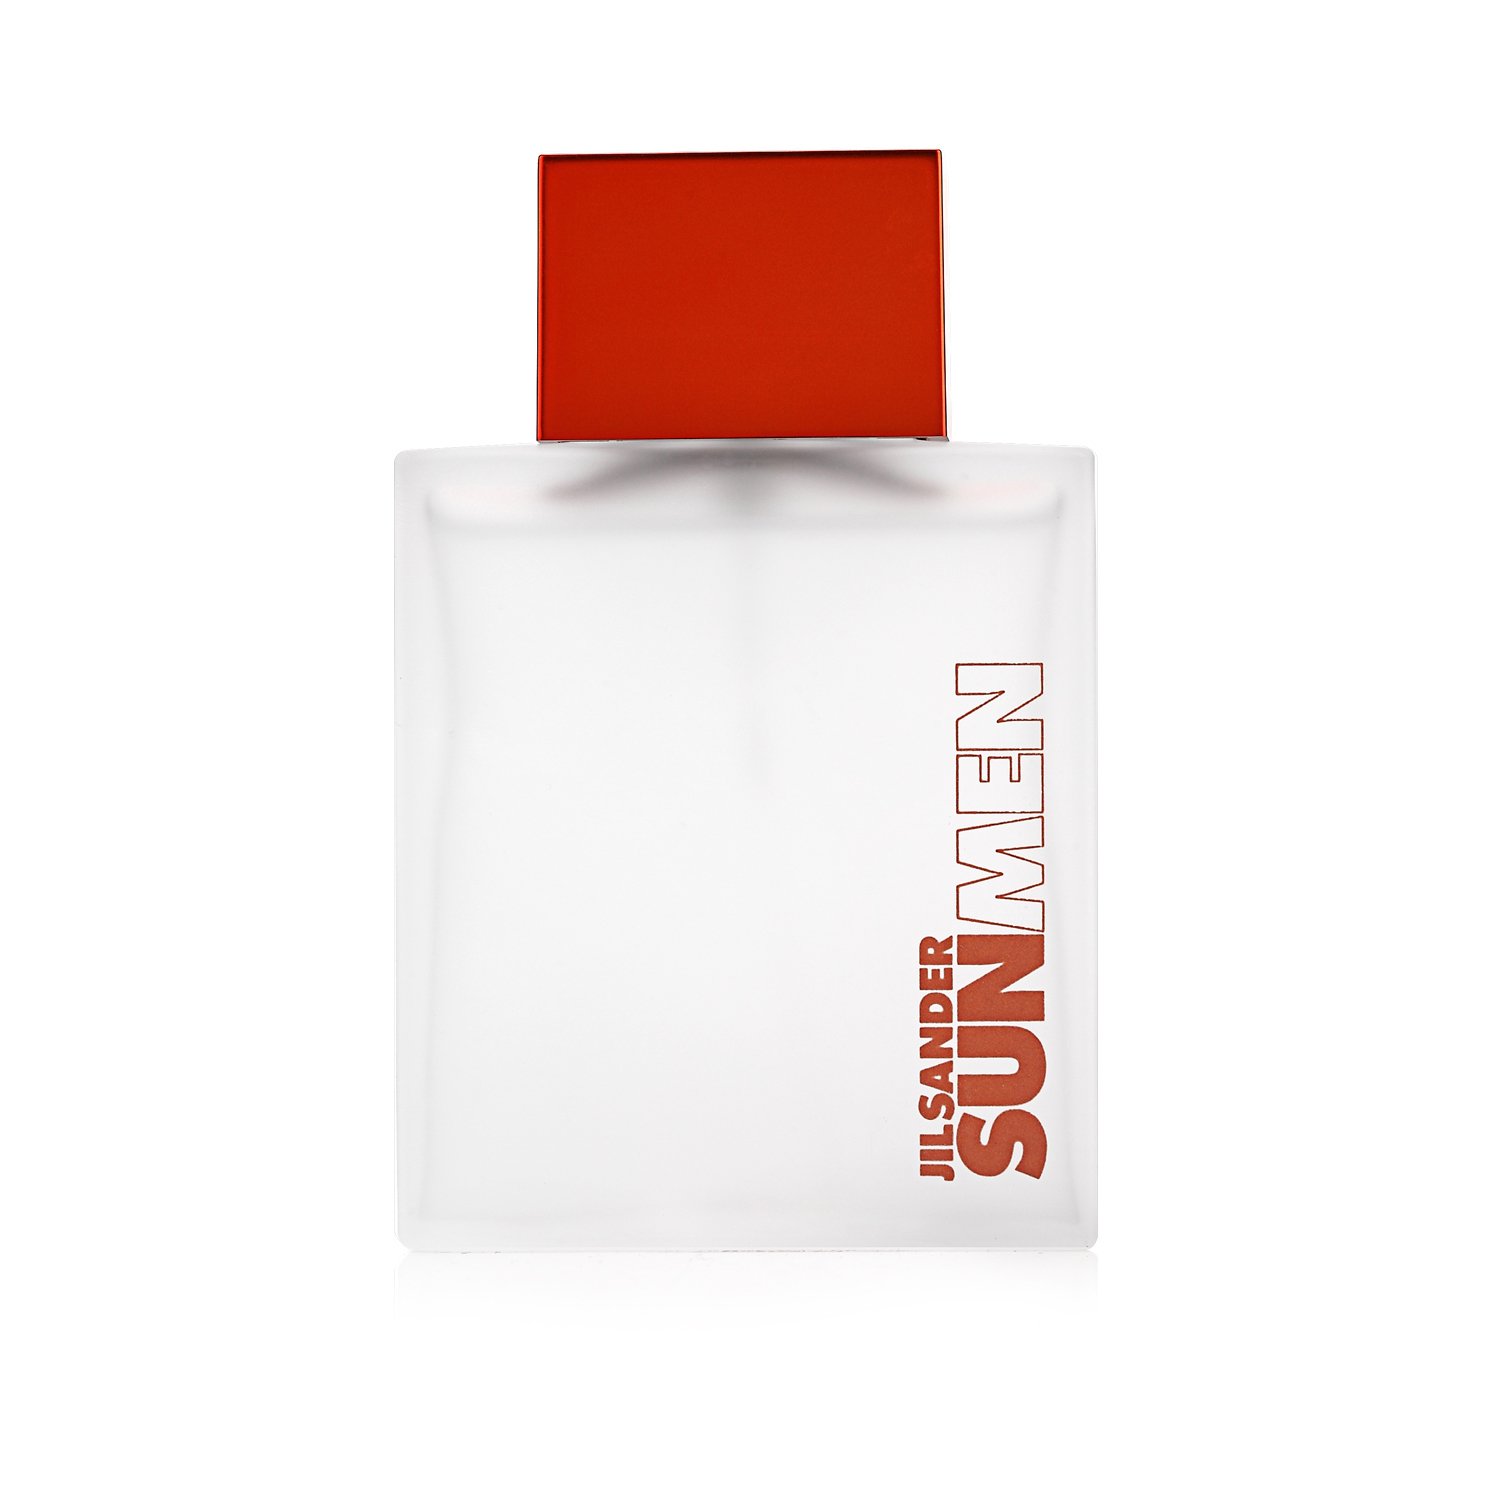 Jil Sander Sun Men Eau de Toilette 75ml Spray | Perfumes of London